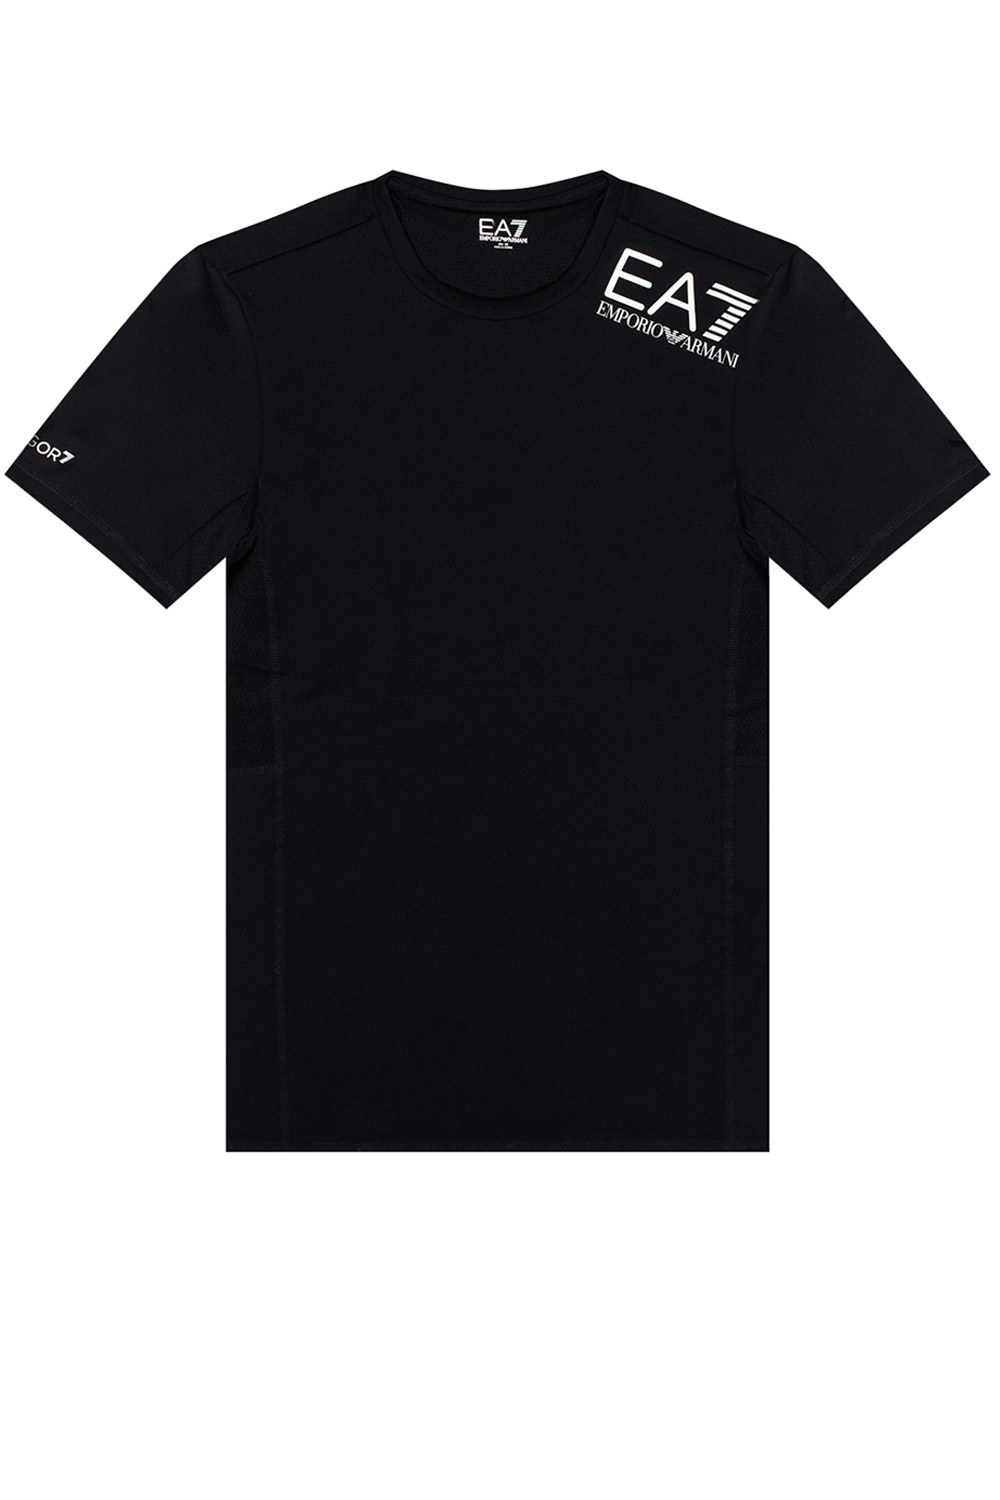 Sneakers EA7 EMPORIO armani CC307 X8X113 XK269 Q701 Sulphur Spring Black Training T-shirt with logo